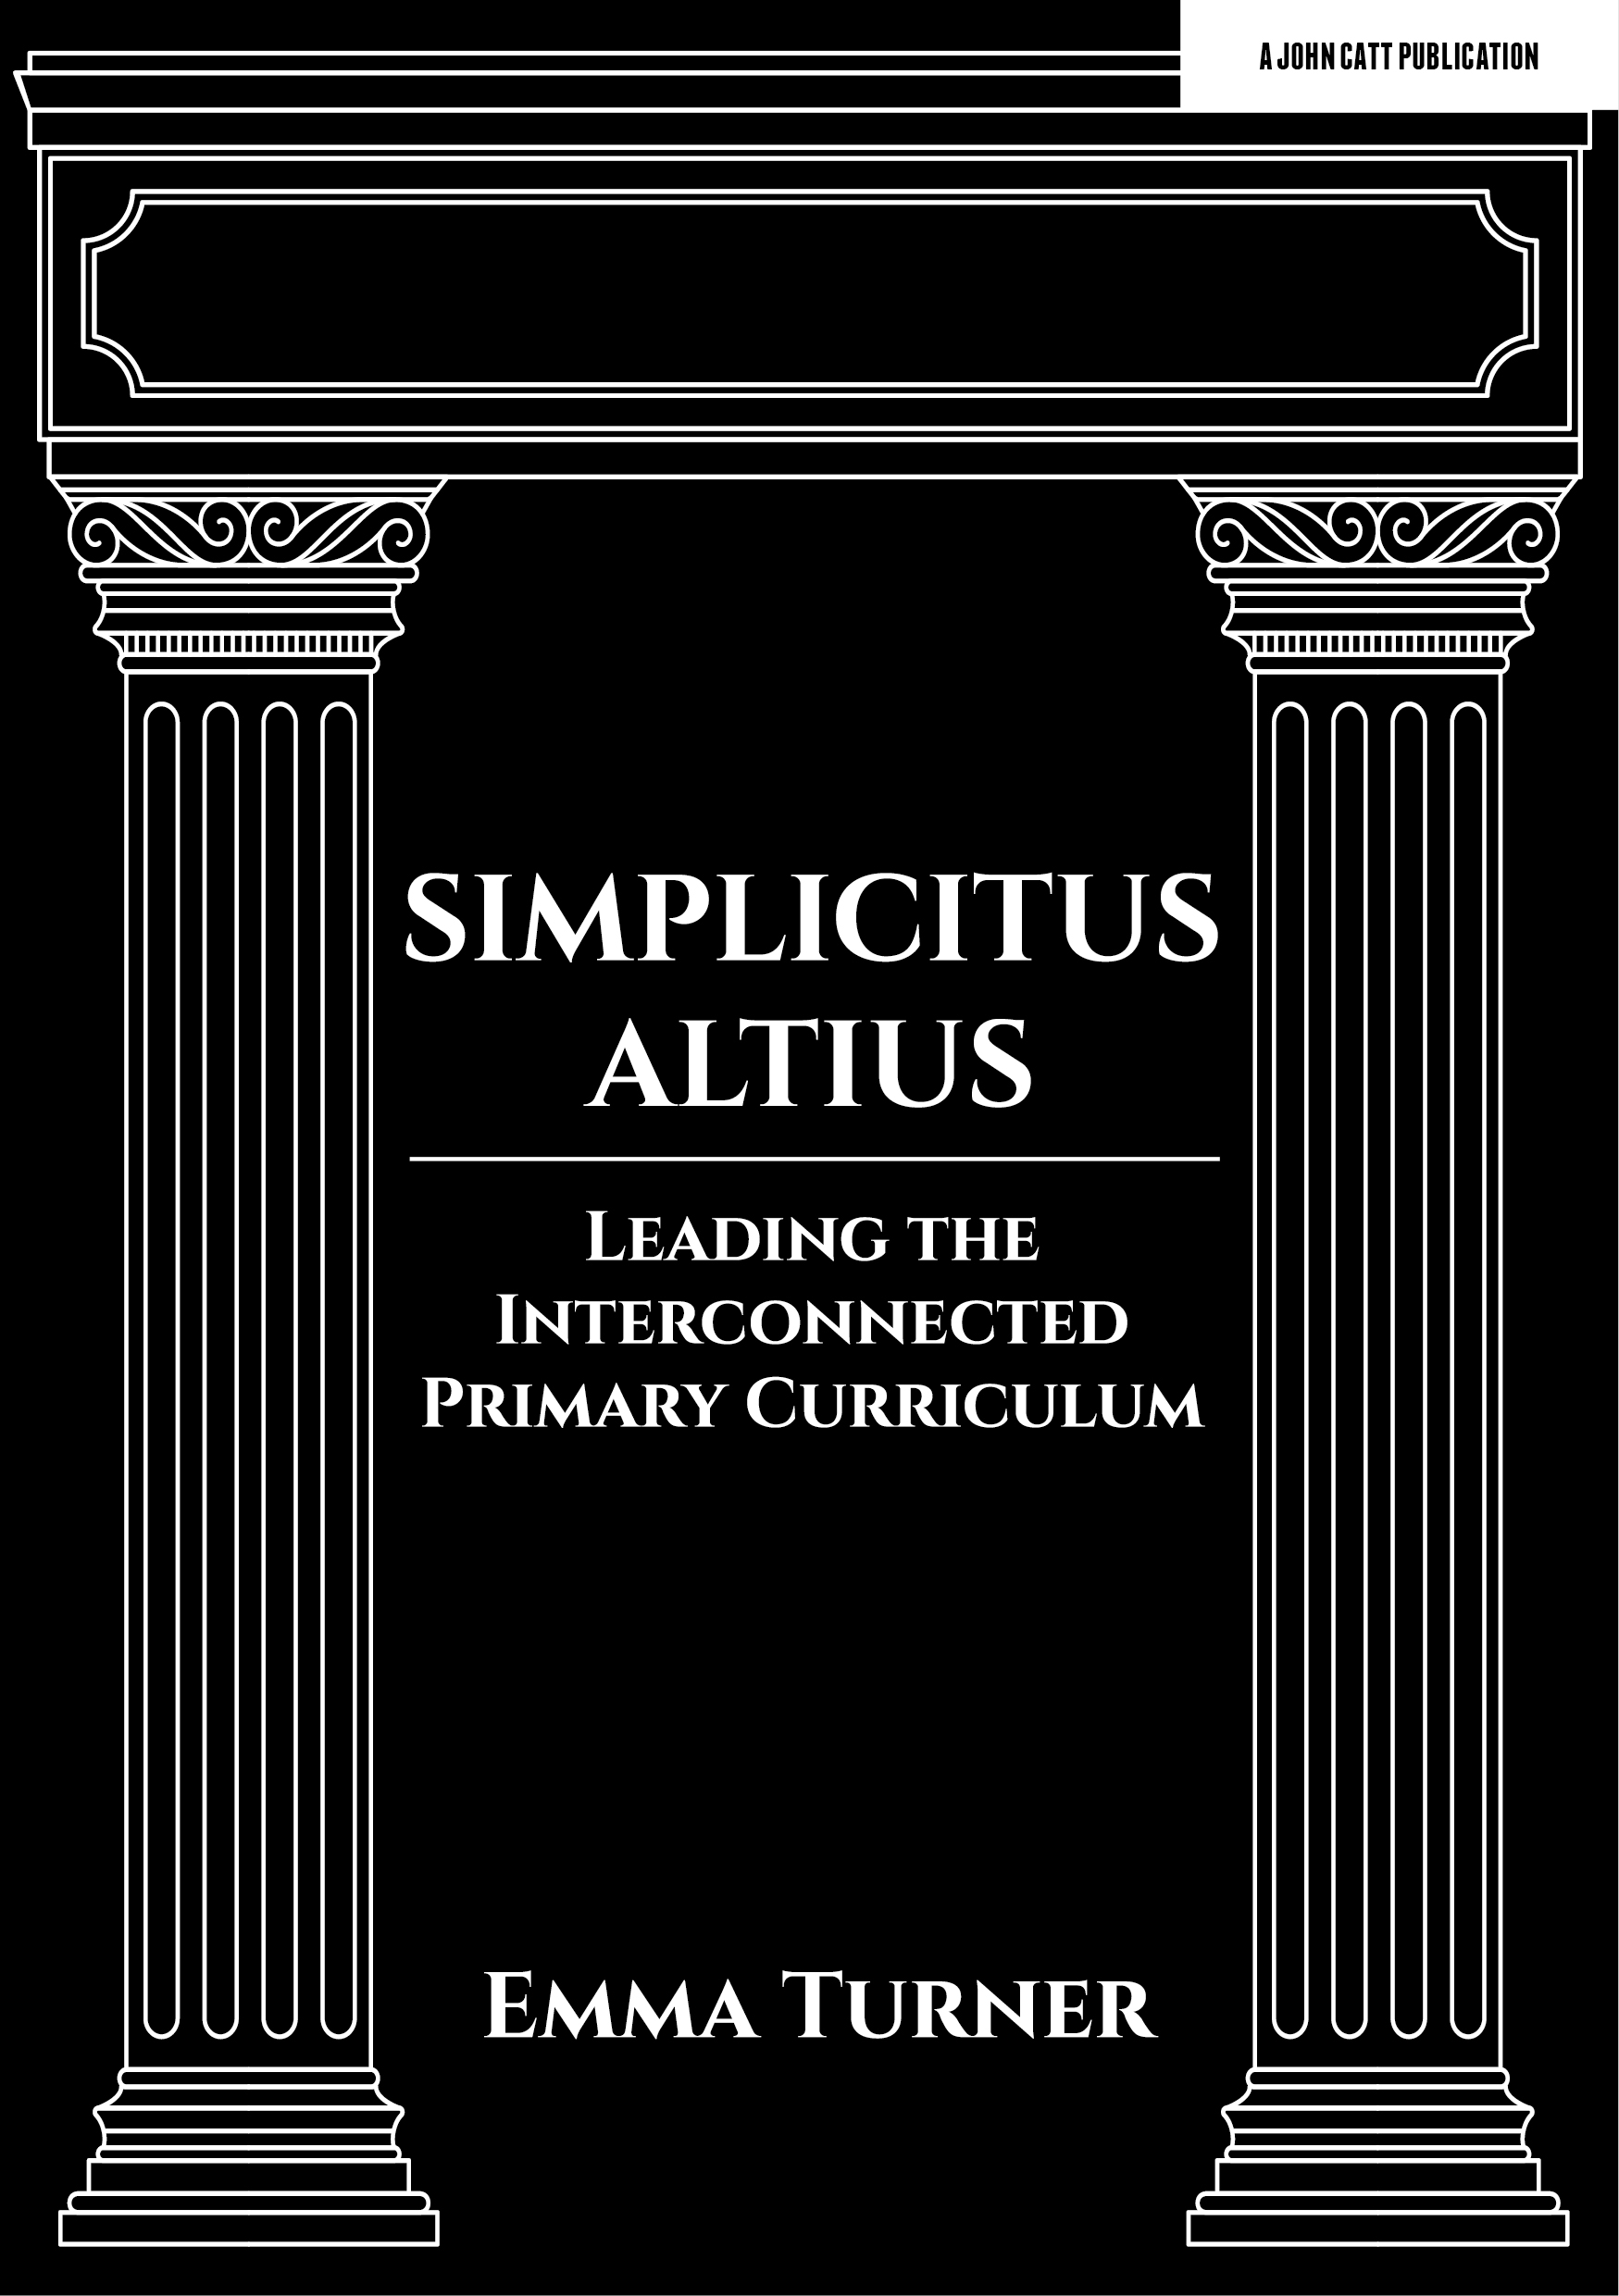 Featured image for “Simplicitus Altius: Leading the Interconnected Primary Curriculum”